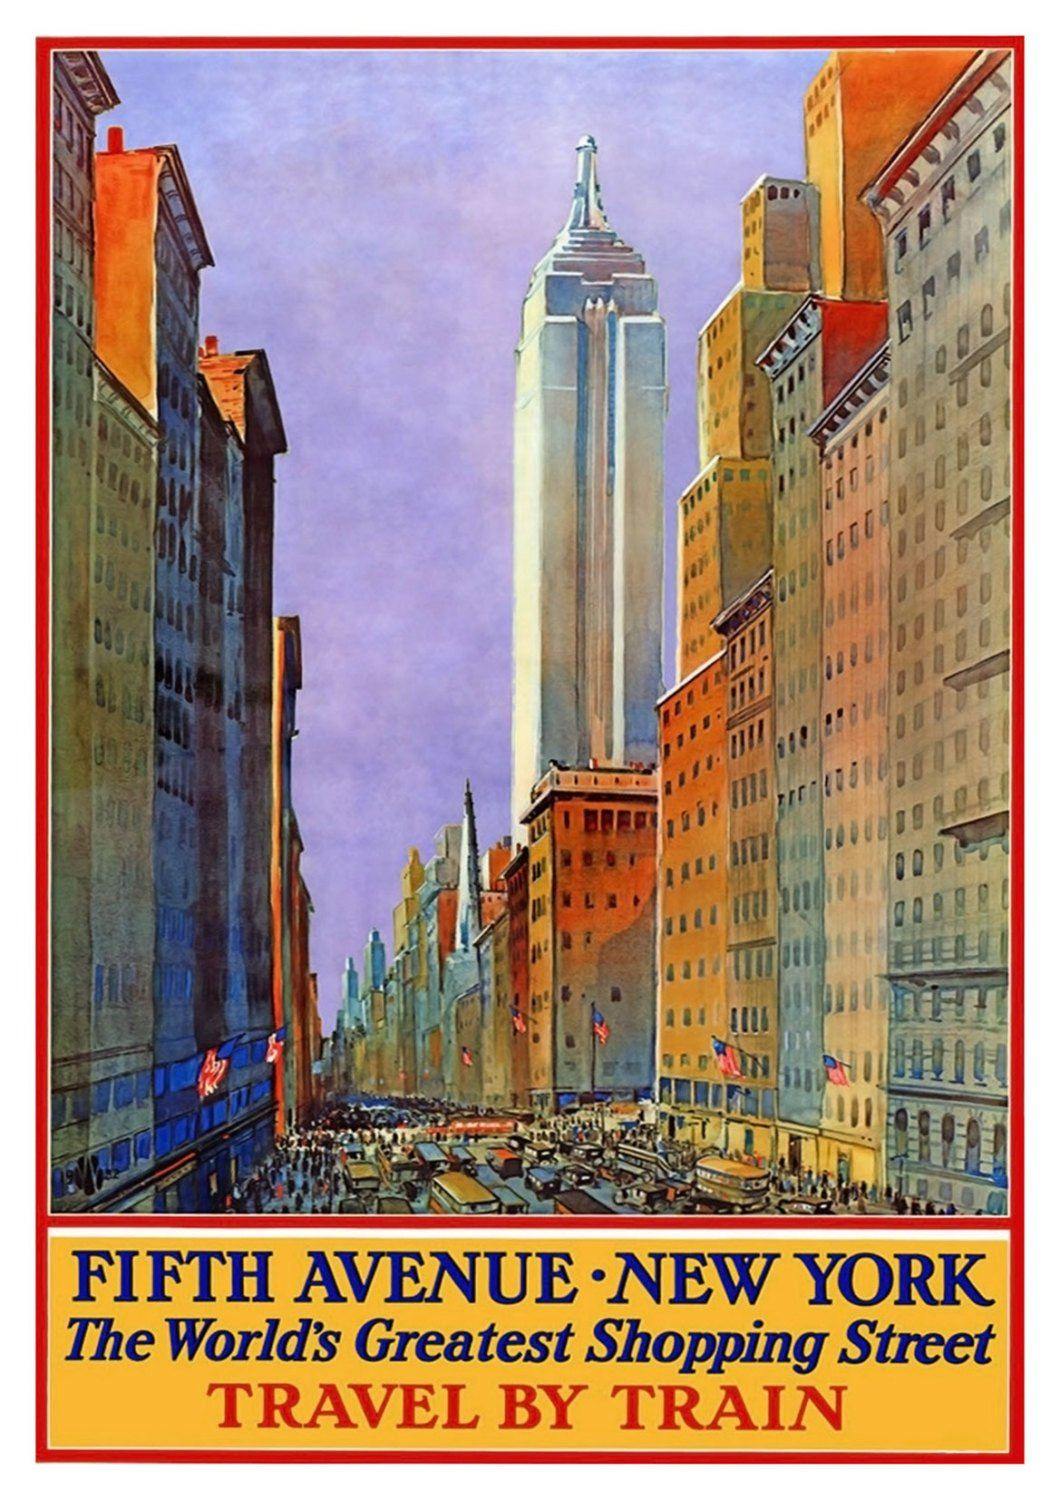 FIFTH AVENUE POSTER: Vintage New York Shopping Print - Pimlico Prints